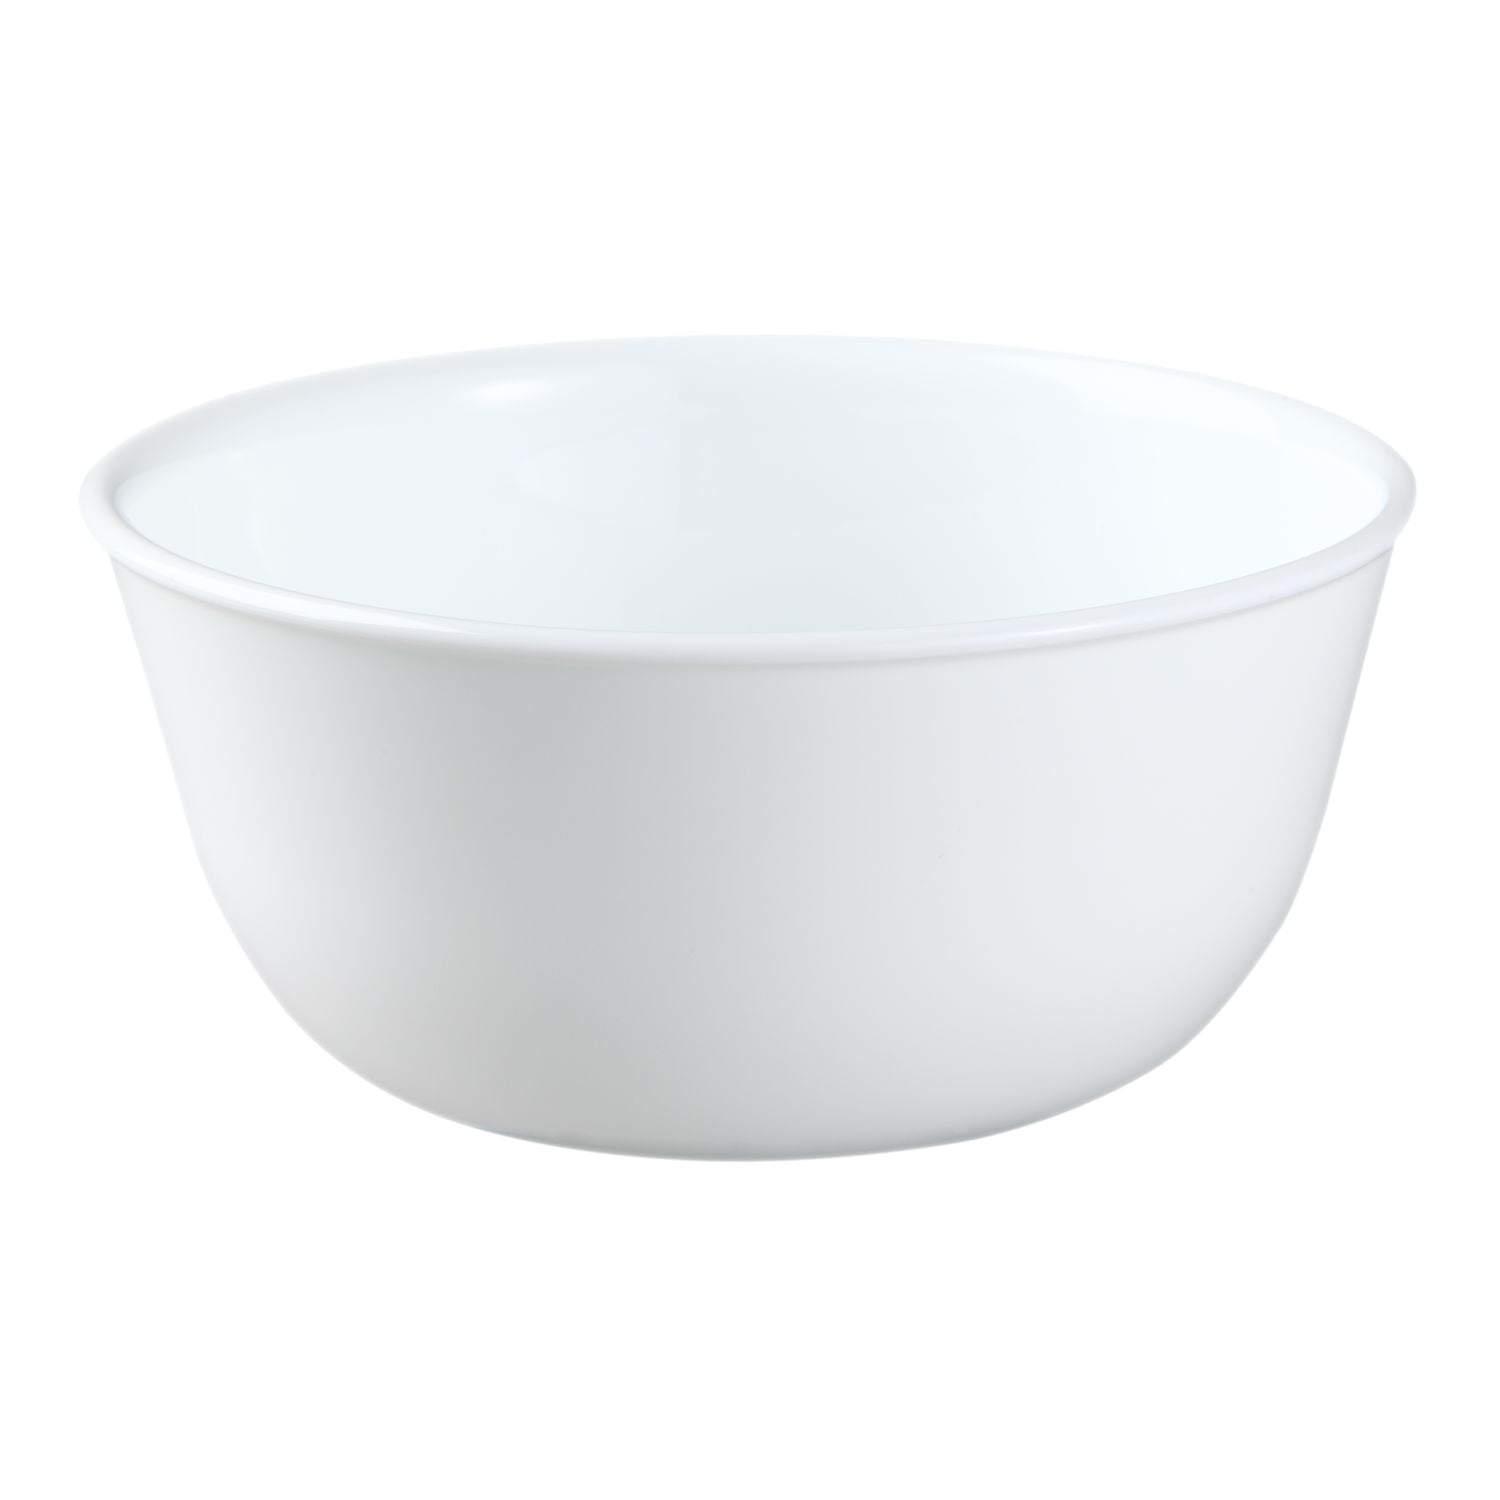 Super Soup and Cereal Bowl Corelle Livingware 28 Oz Winter Frost White 1032595 